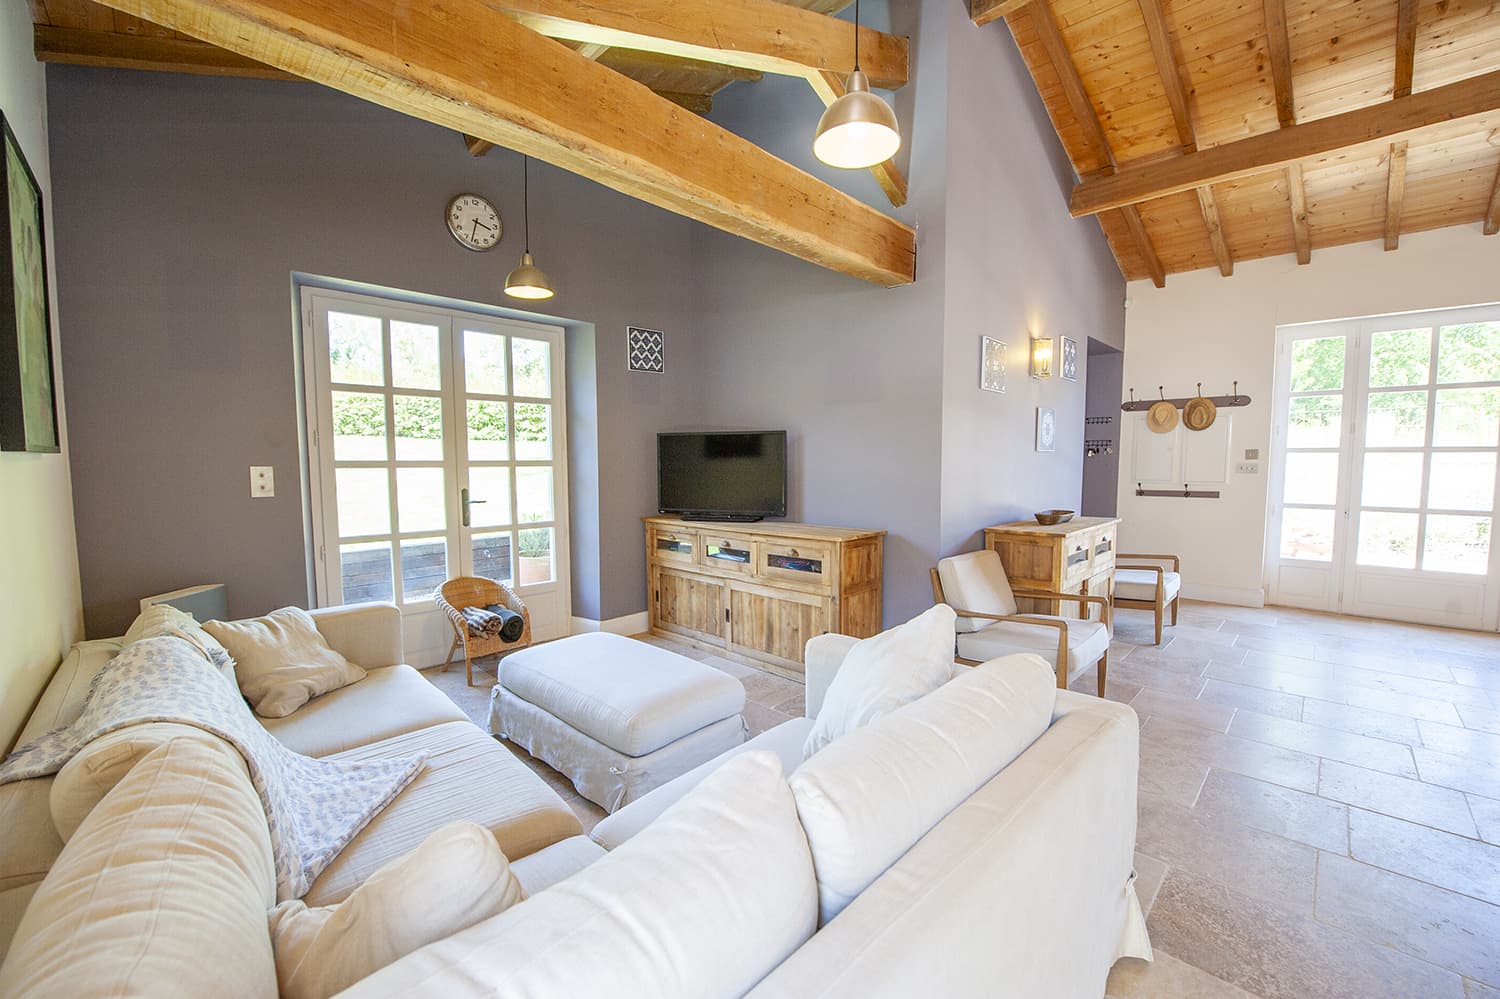 Living room in Haute-Garonne rental home